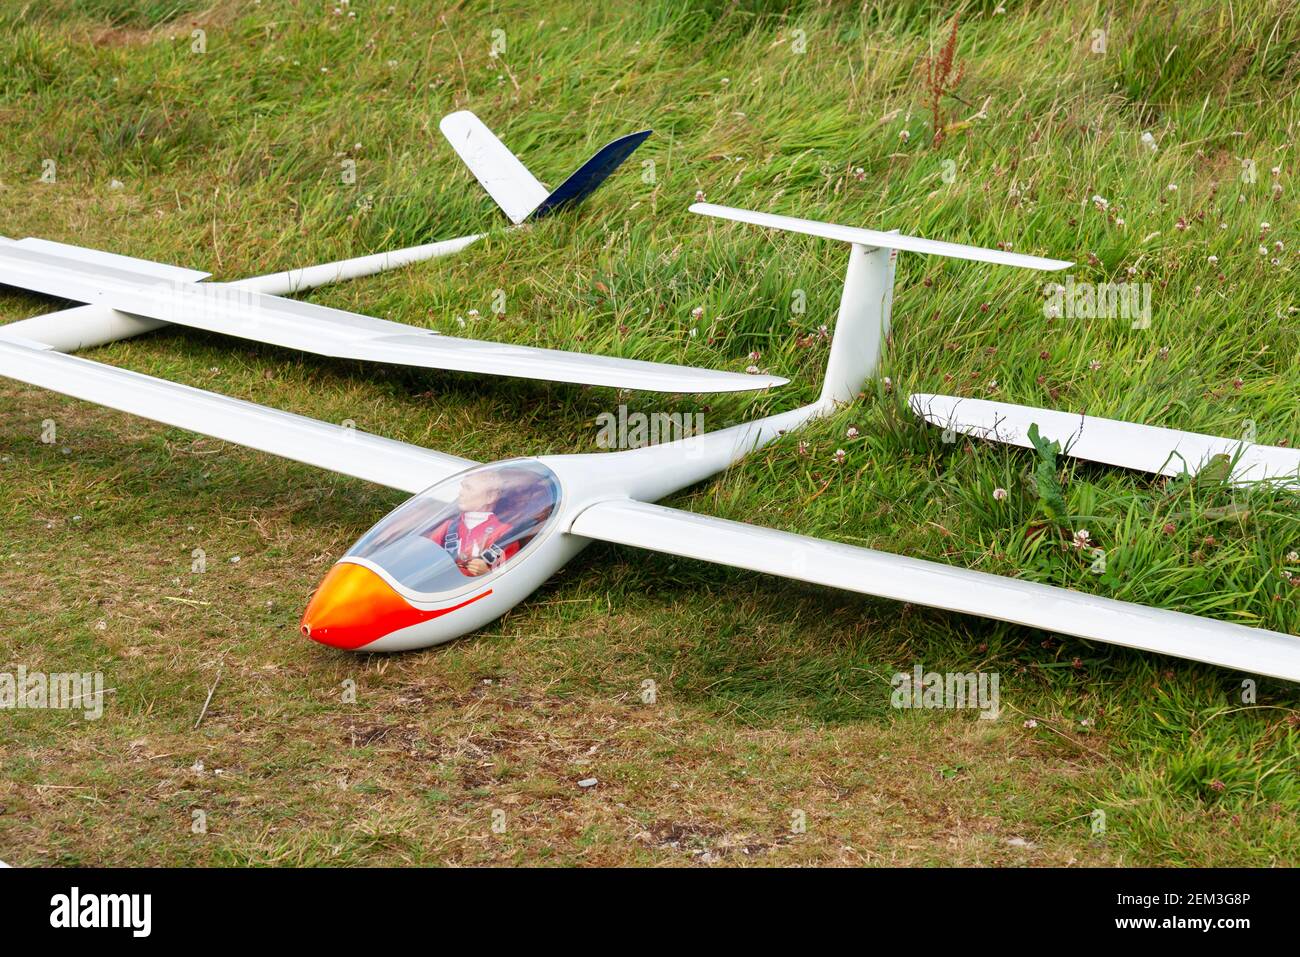 Flying model plane with dummy pilot used for aeromodelling Stock Photo